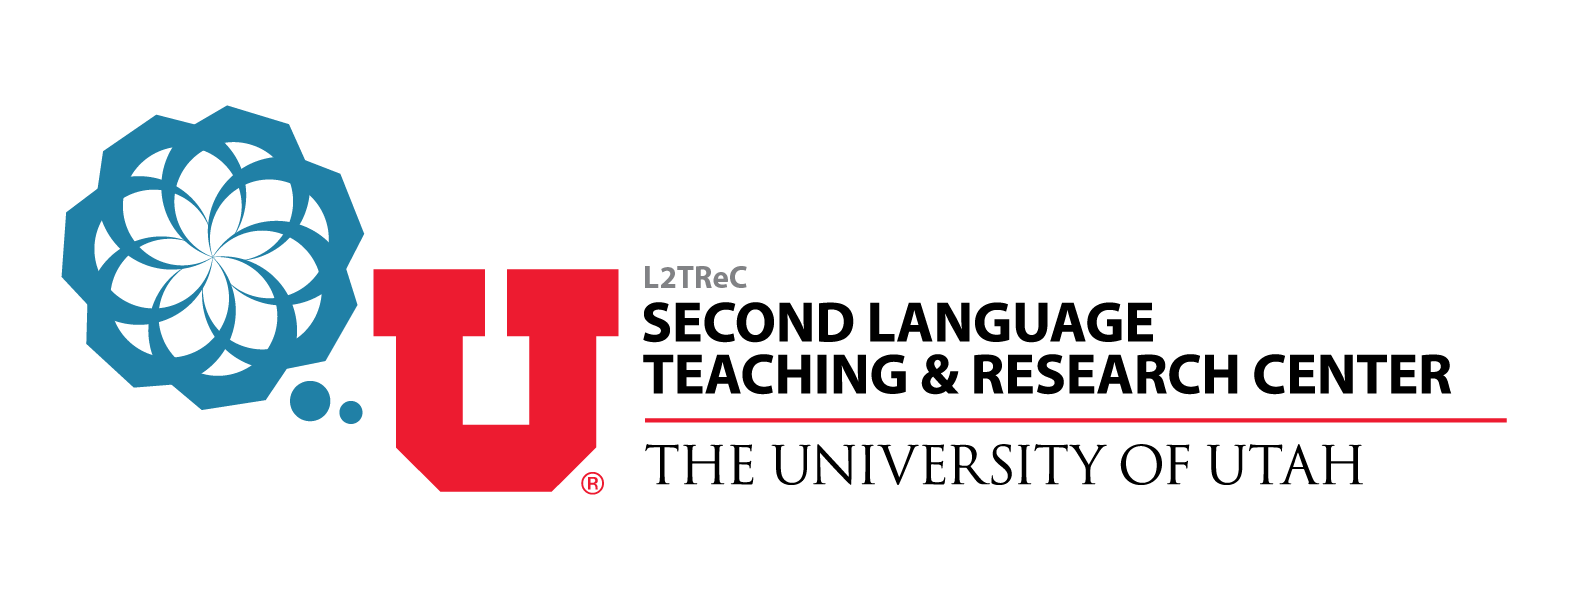 L2TReC, University of Utah’s Second Language Teaching and Research Center